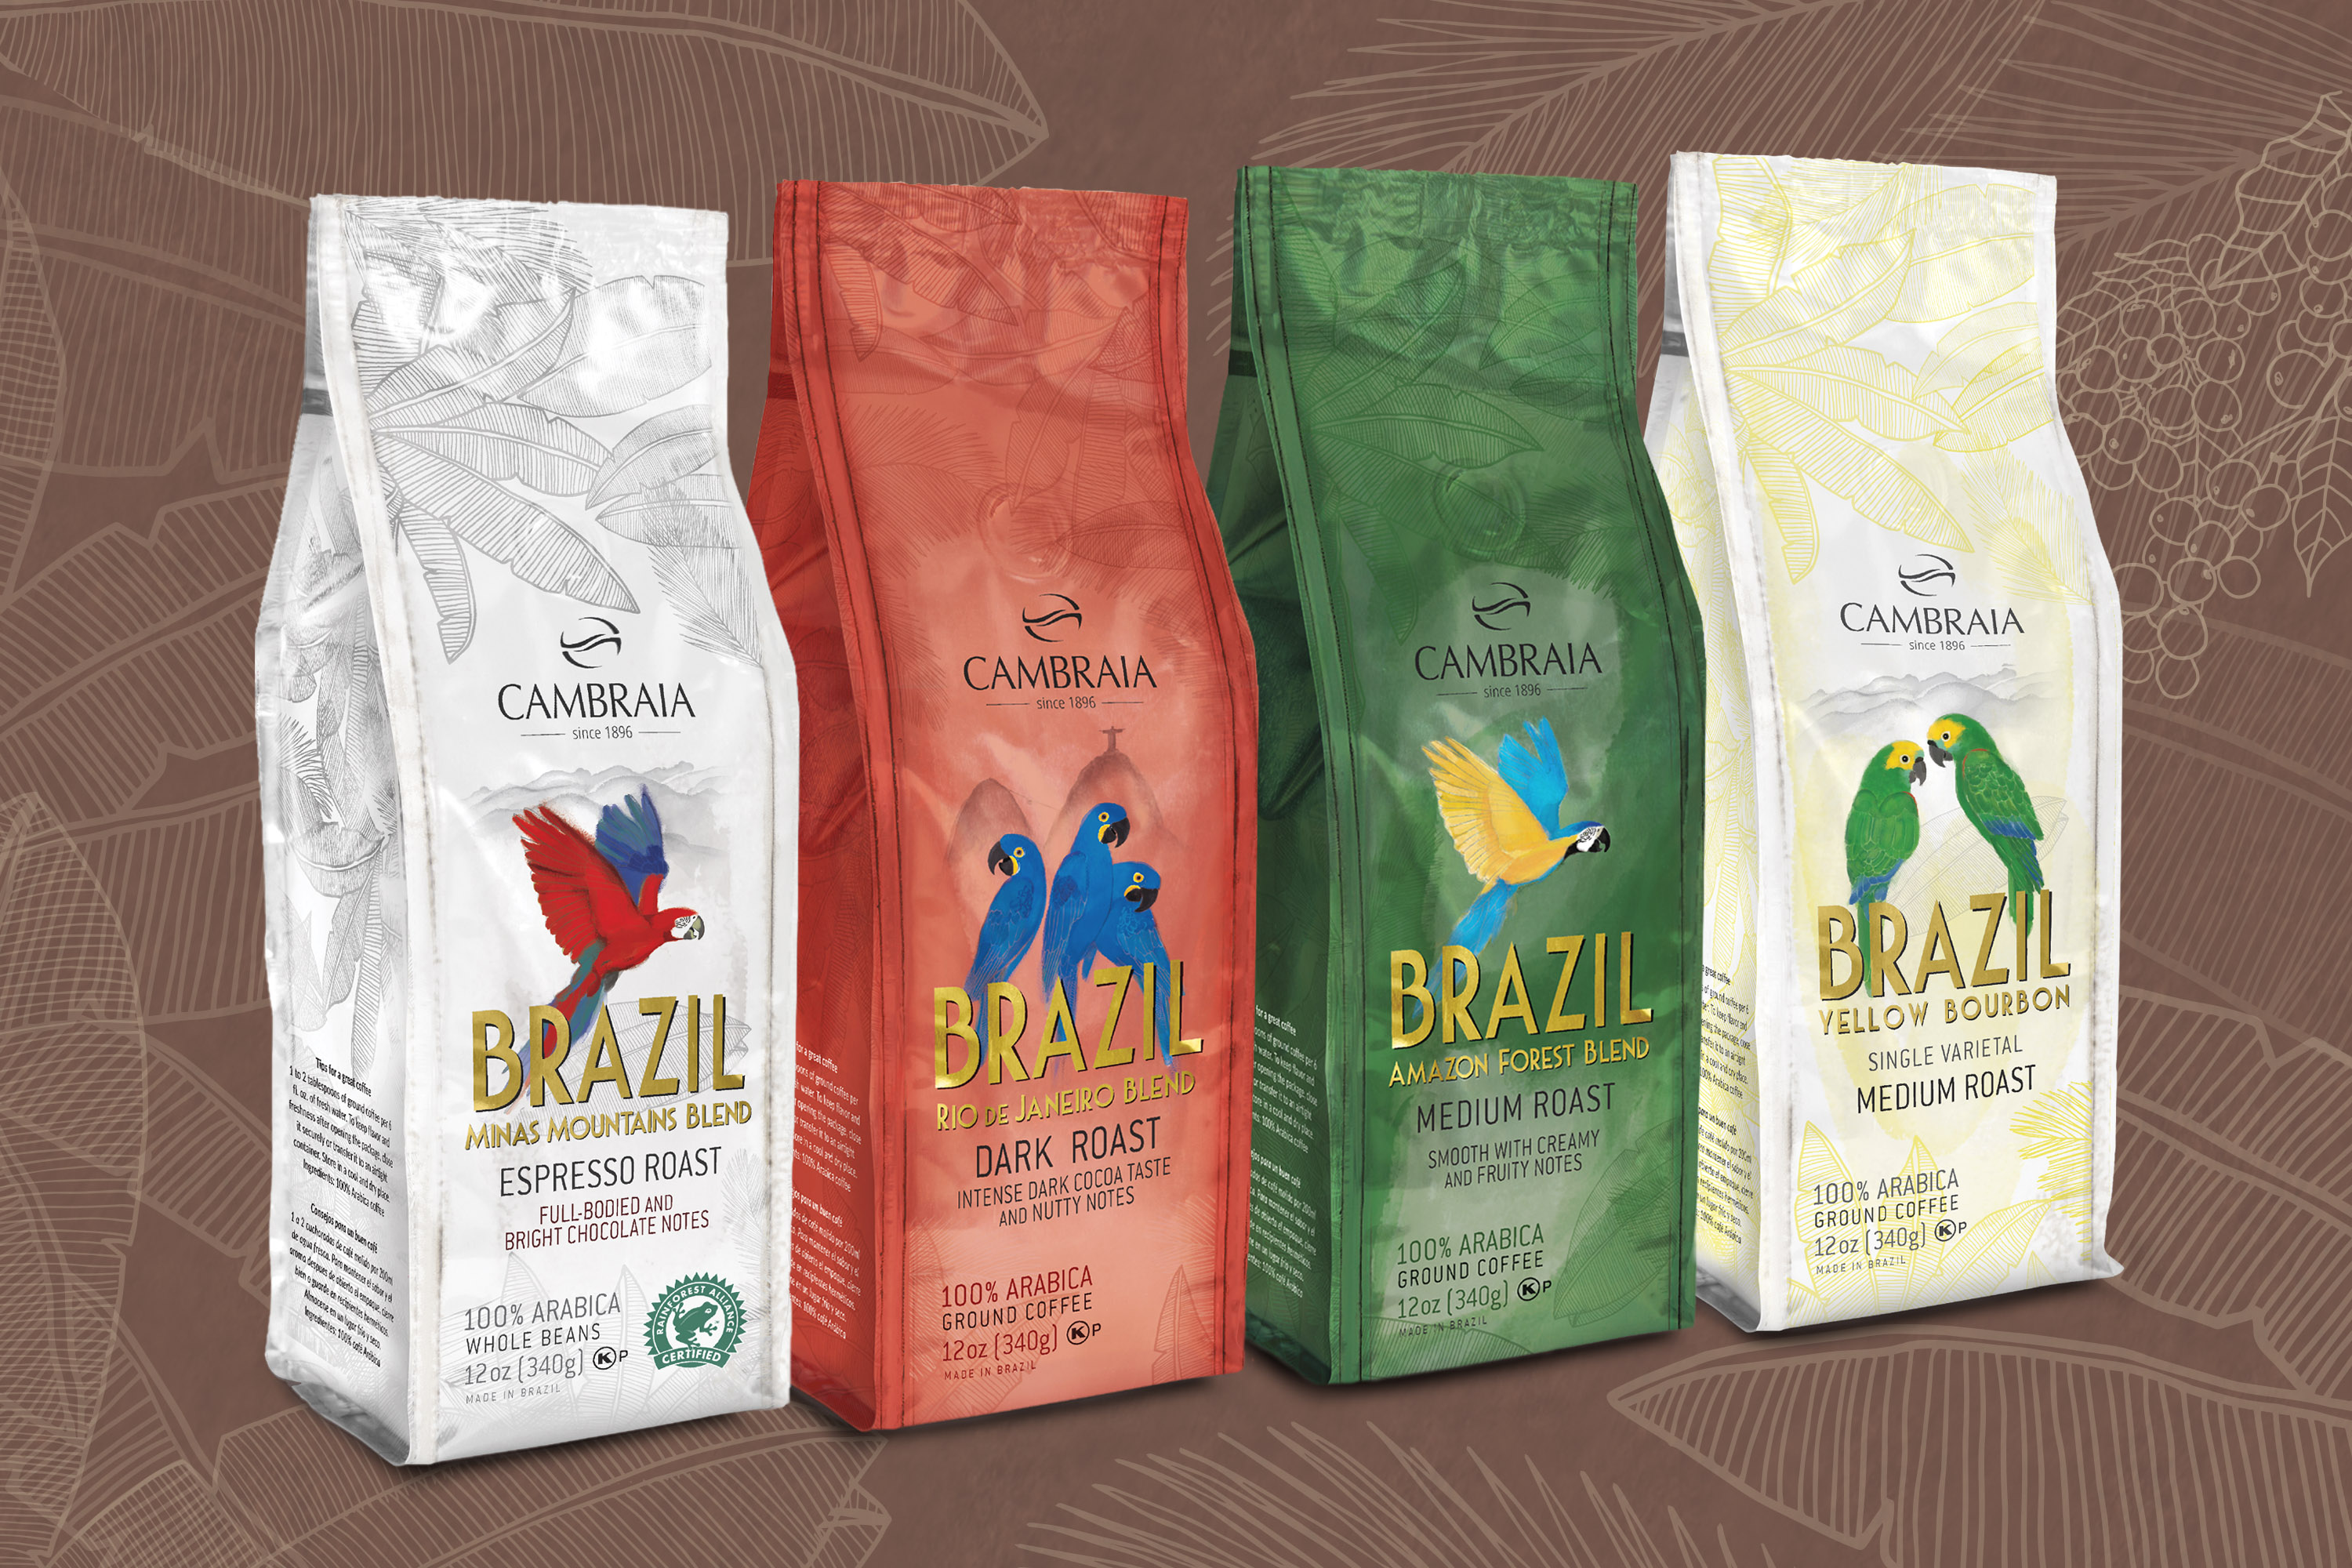 Cambraia’s line of Brazilian Coffees